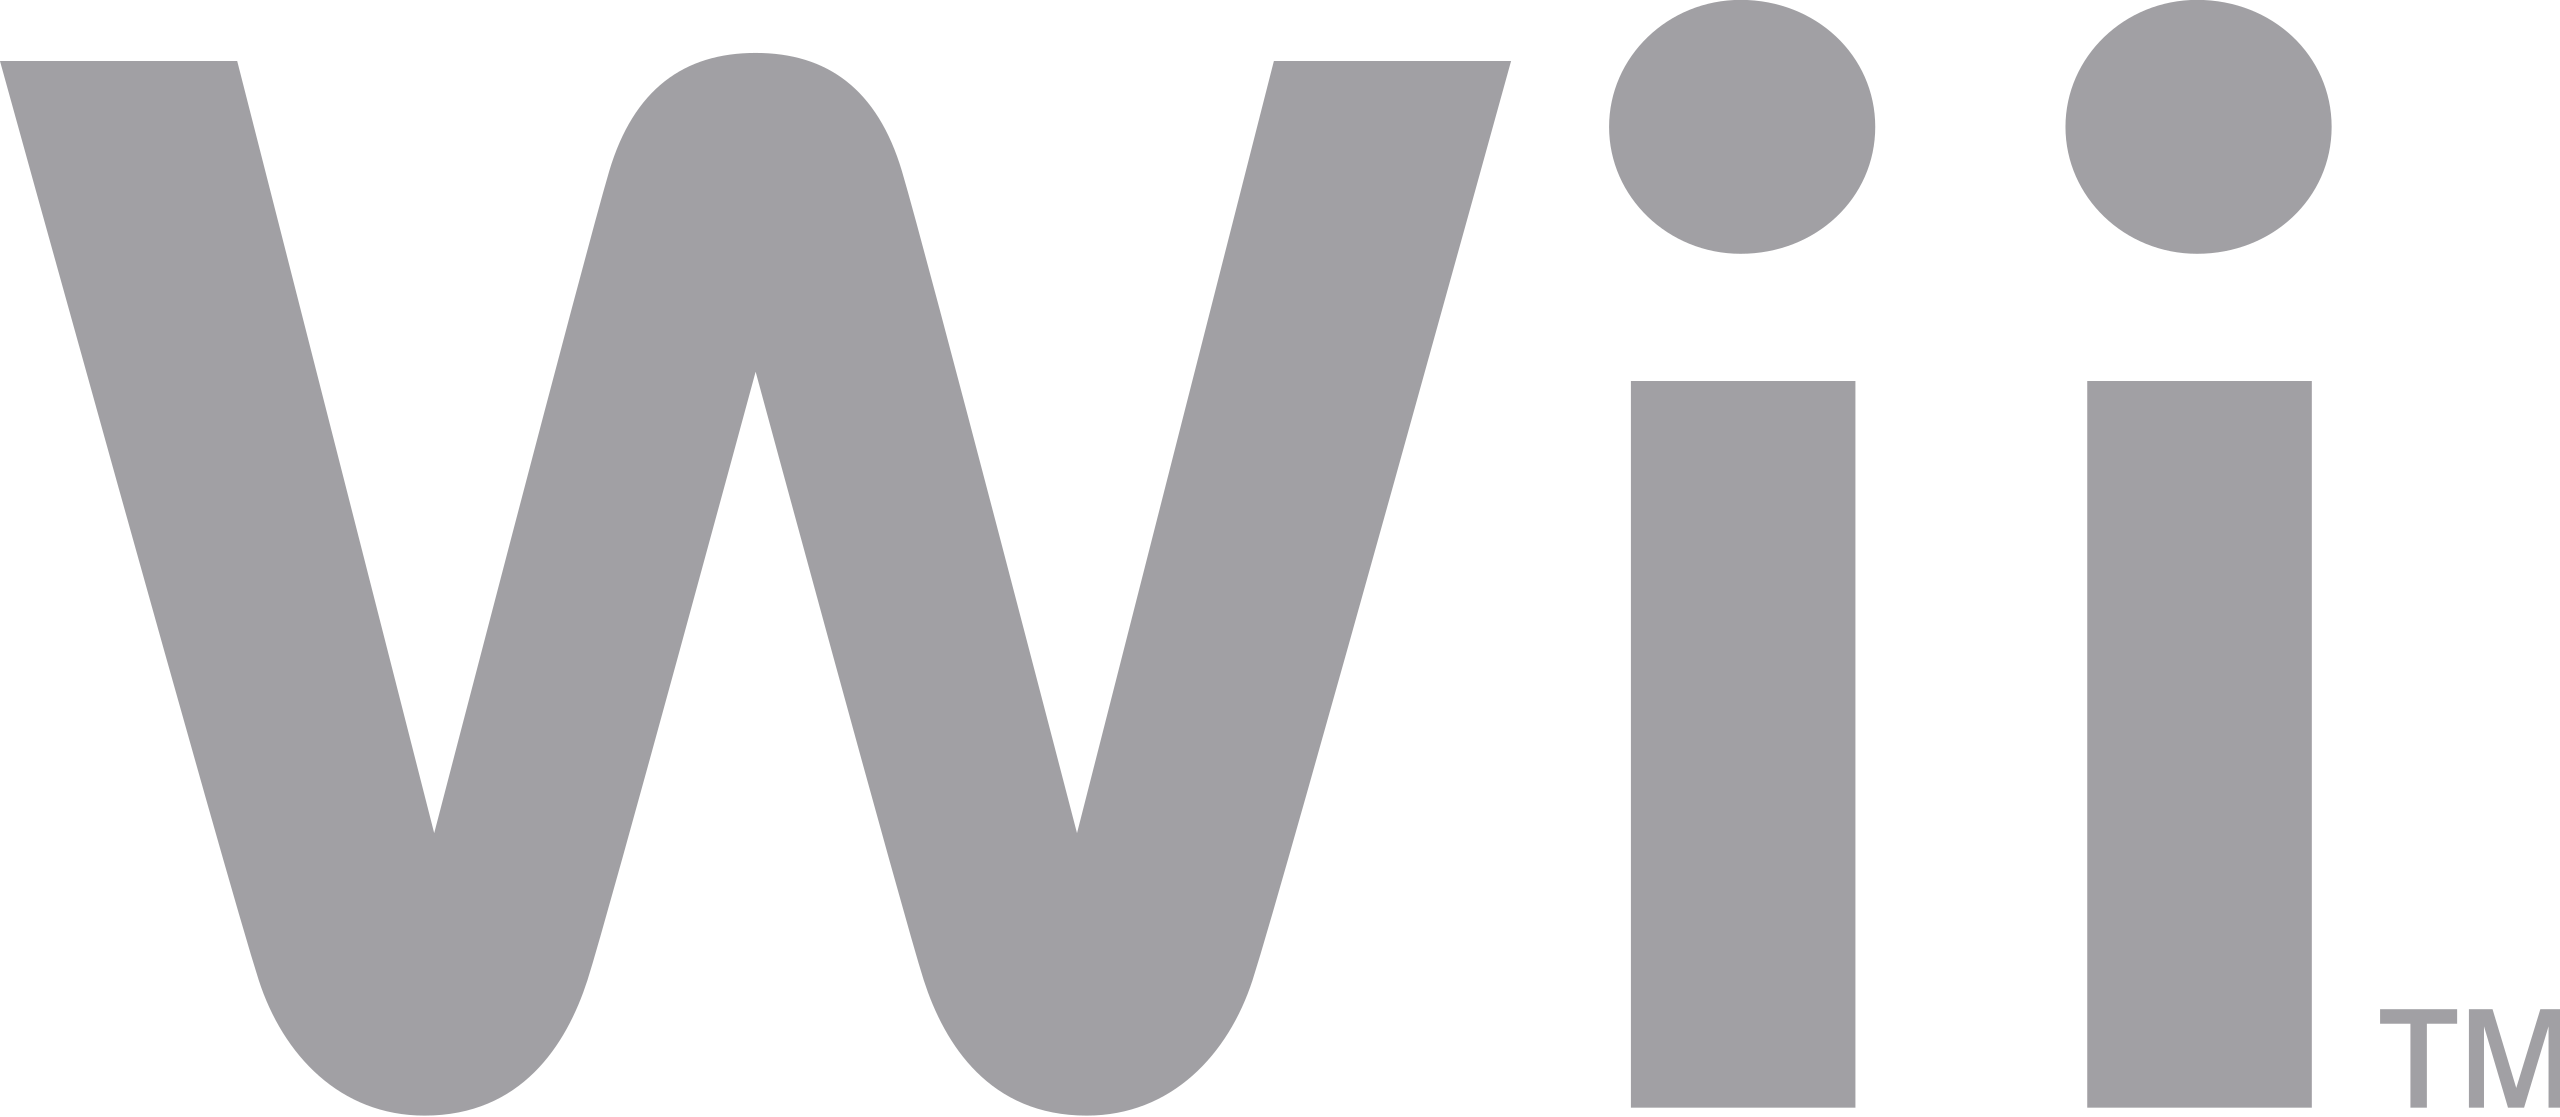 File:Wear OS icon.svg - Wikipedia